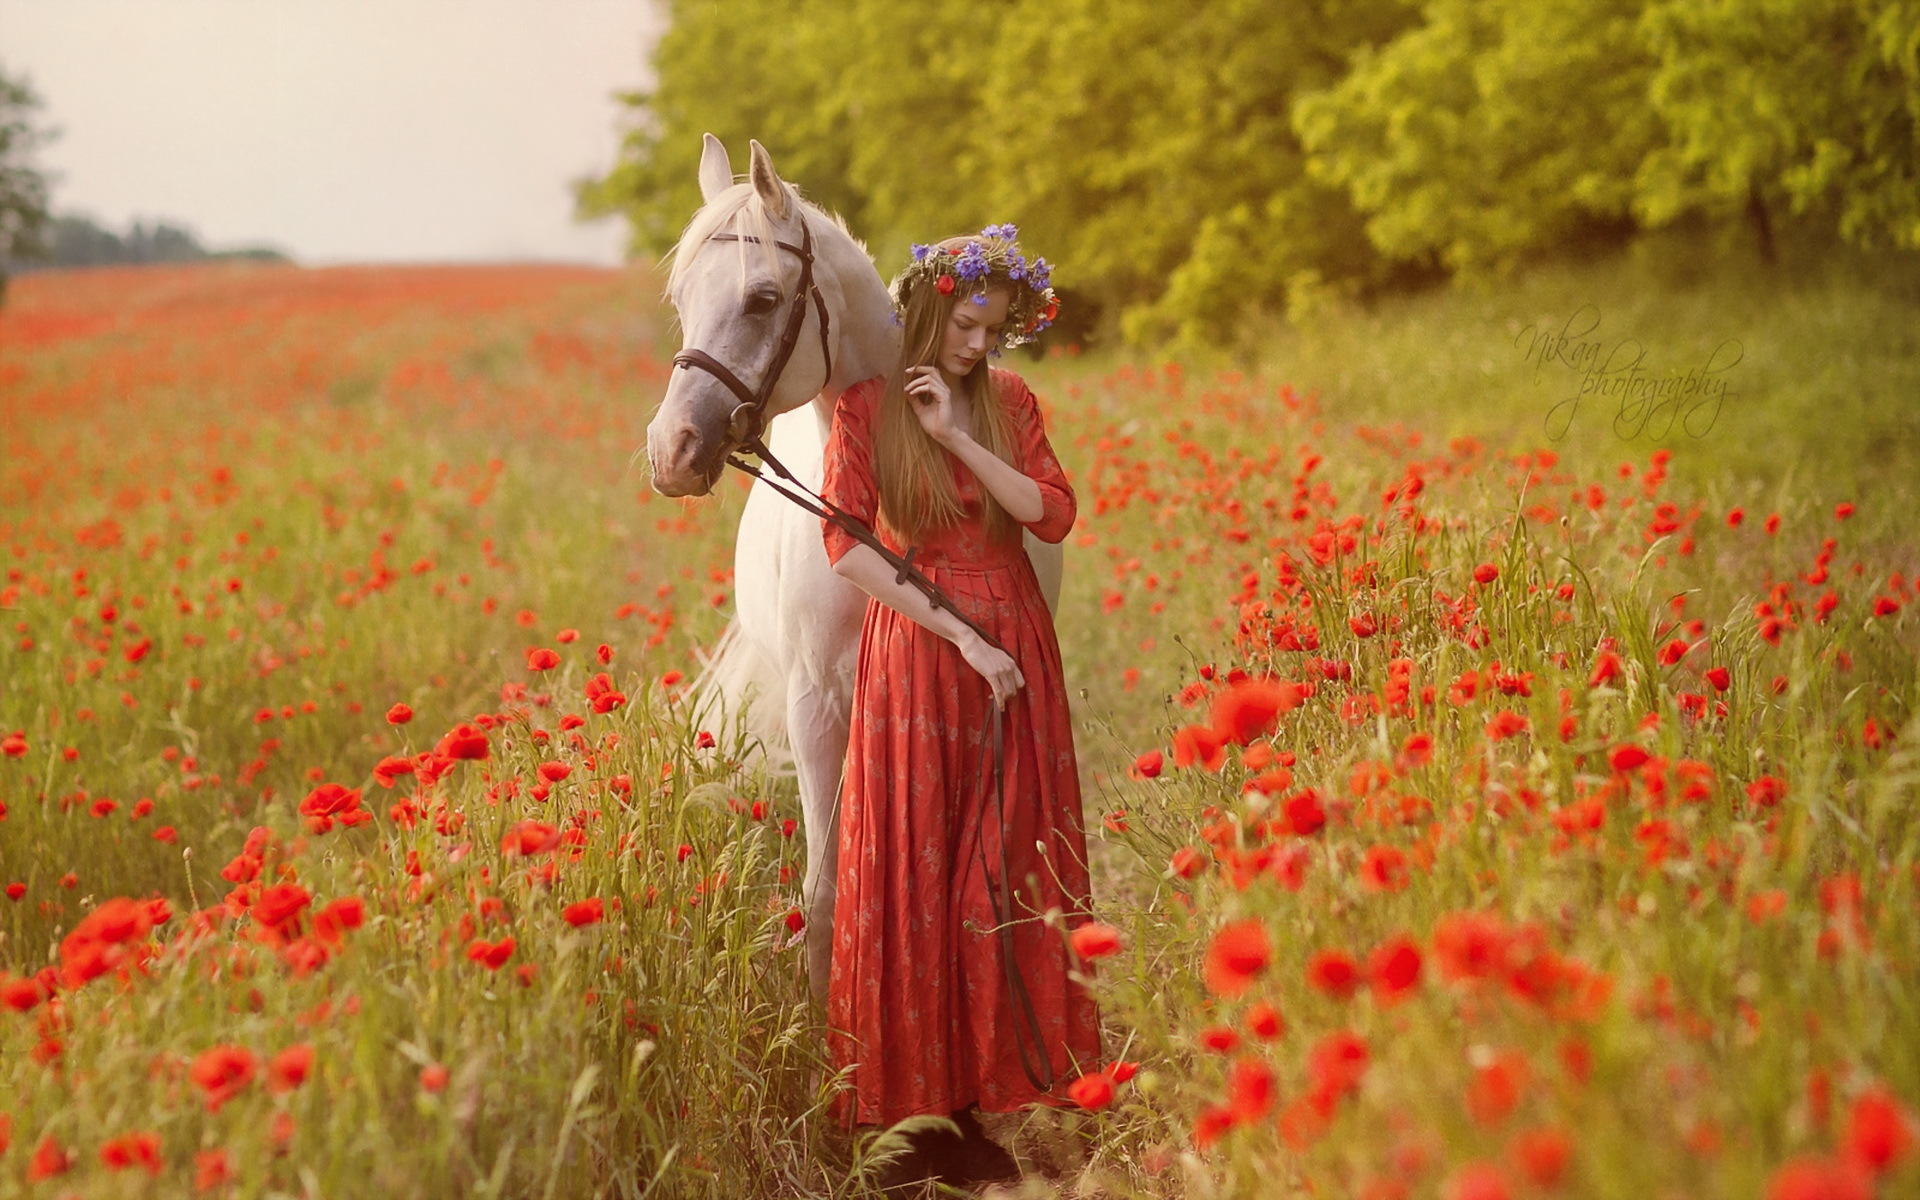 Лошадь на цветущем лугу